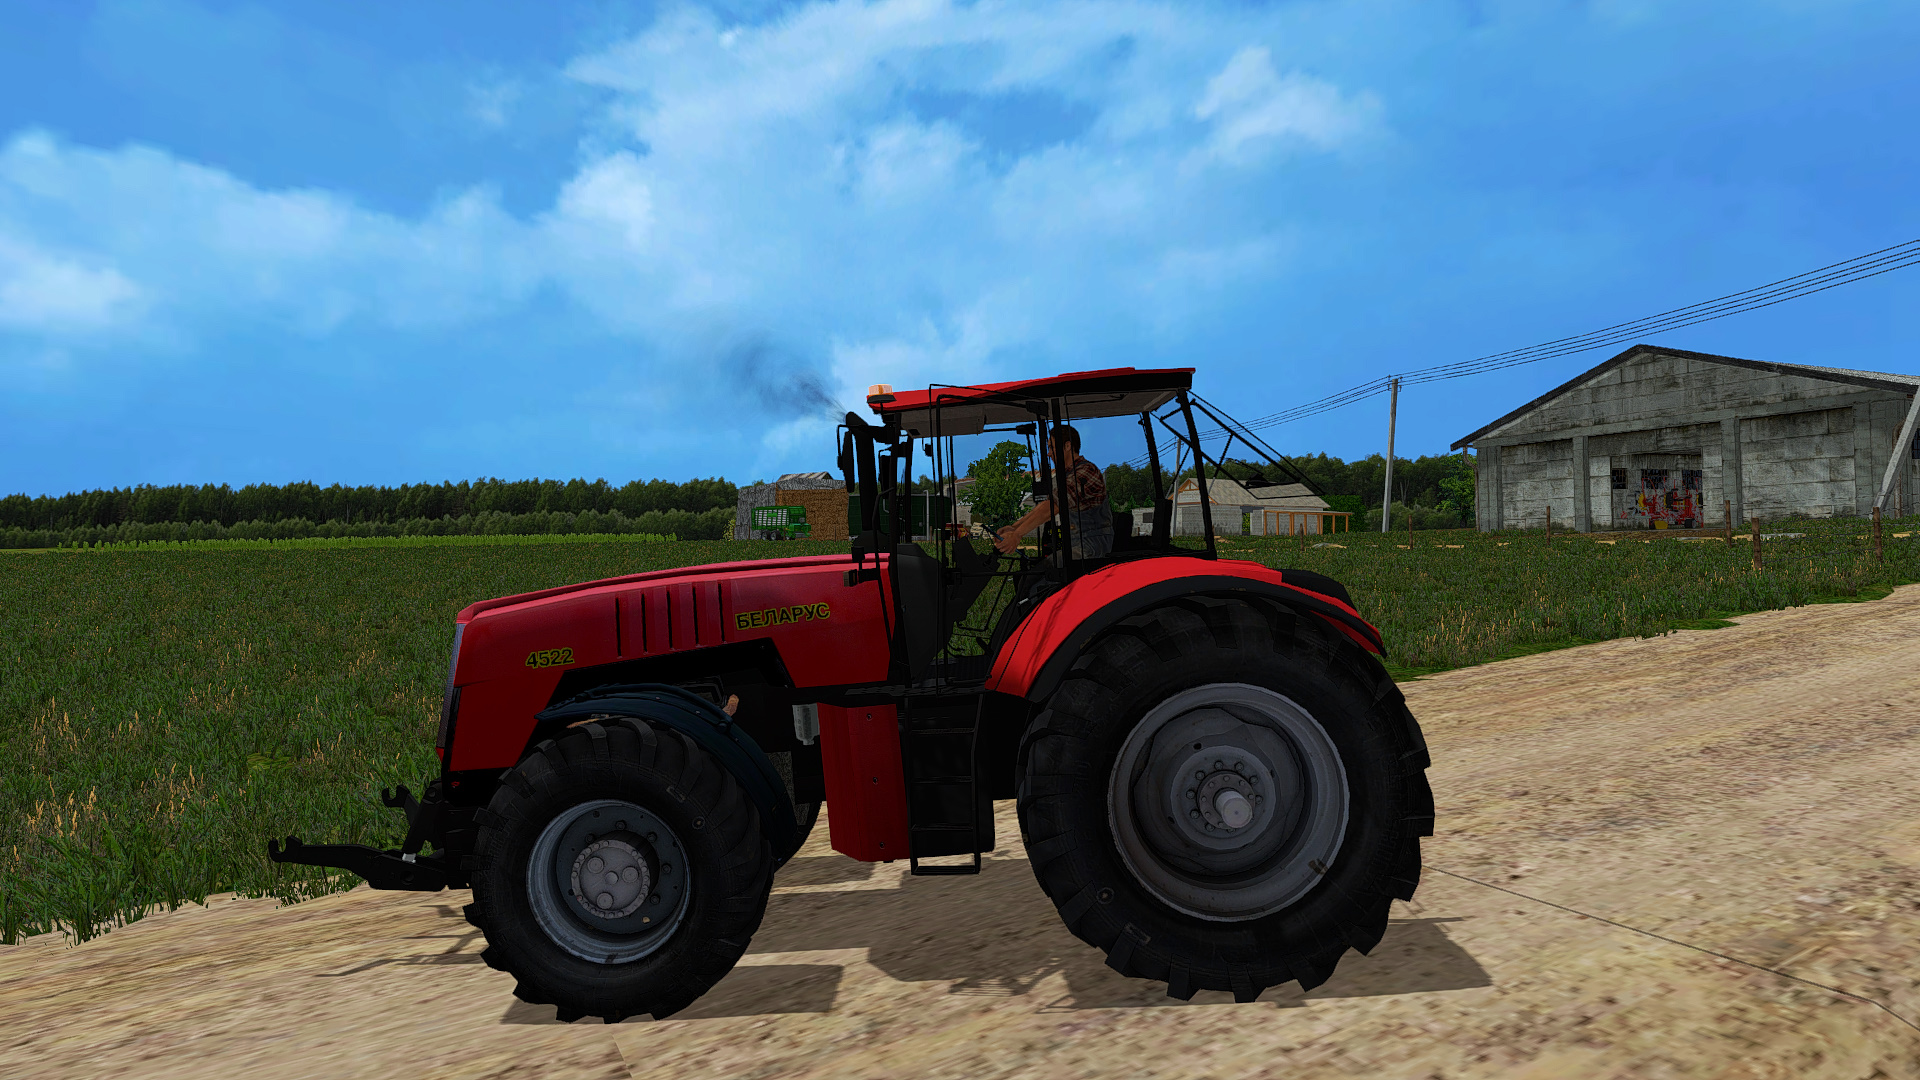 Tractor Belarus 4522 v1.4 for FS 15 » Zagruzka-Mods.com - Download ...